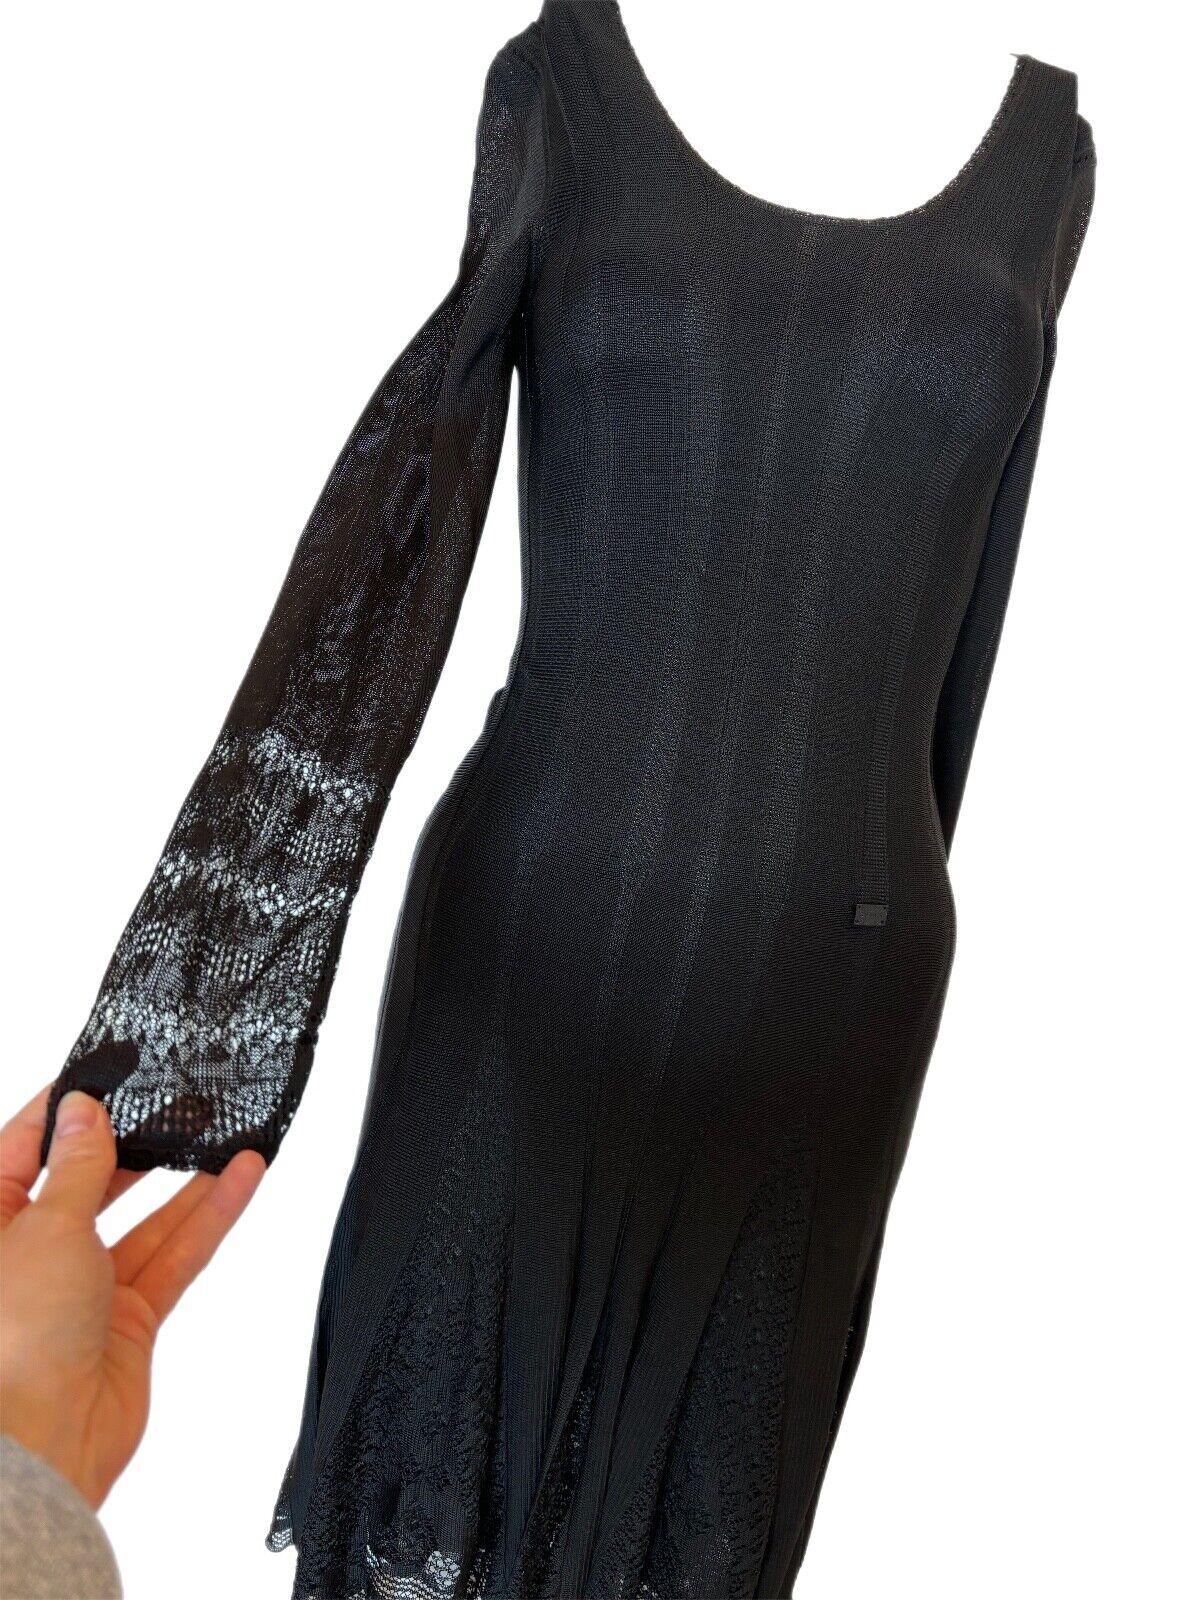 CHANEL 2005 vintage black pointelle long sleeve dress In Excellent Condition For Sale In Leonardo, NJ